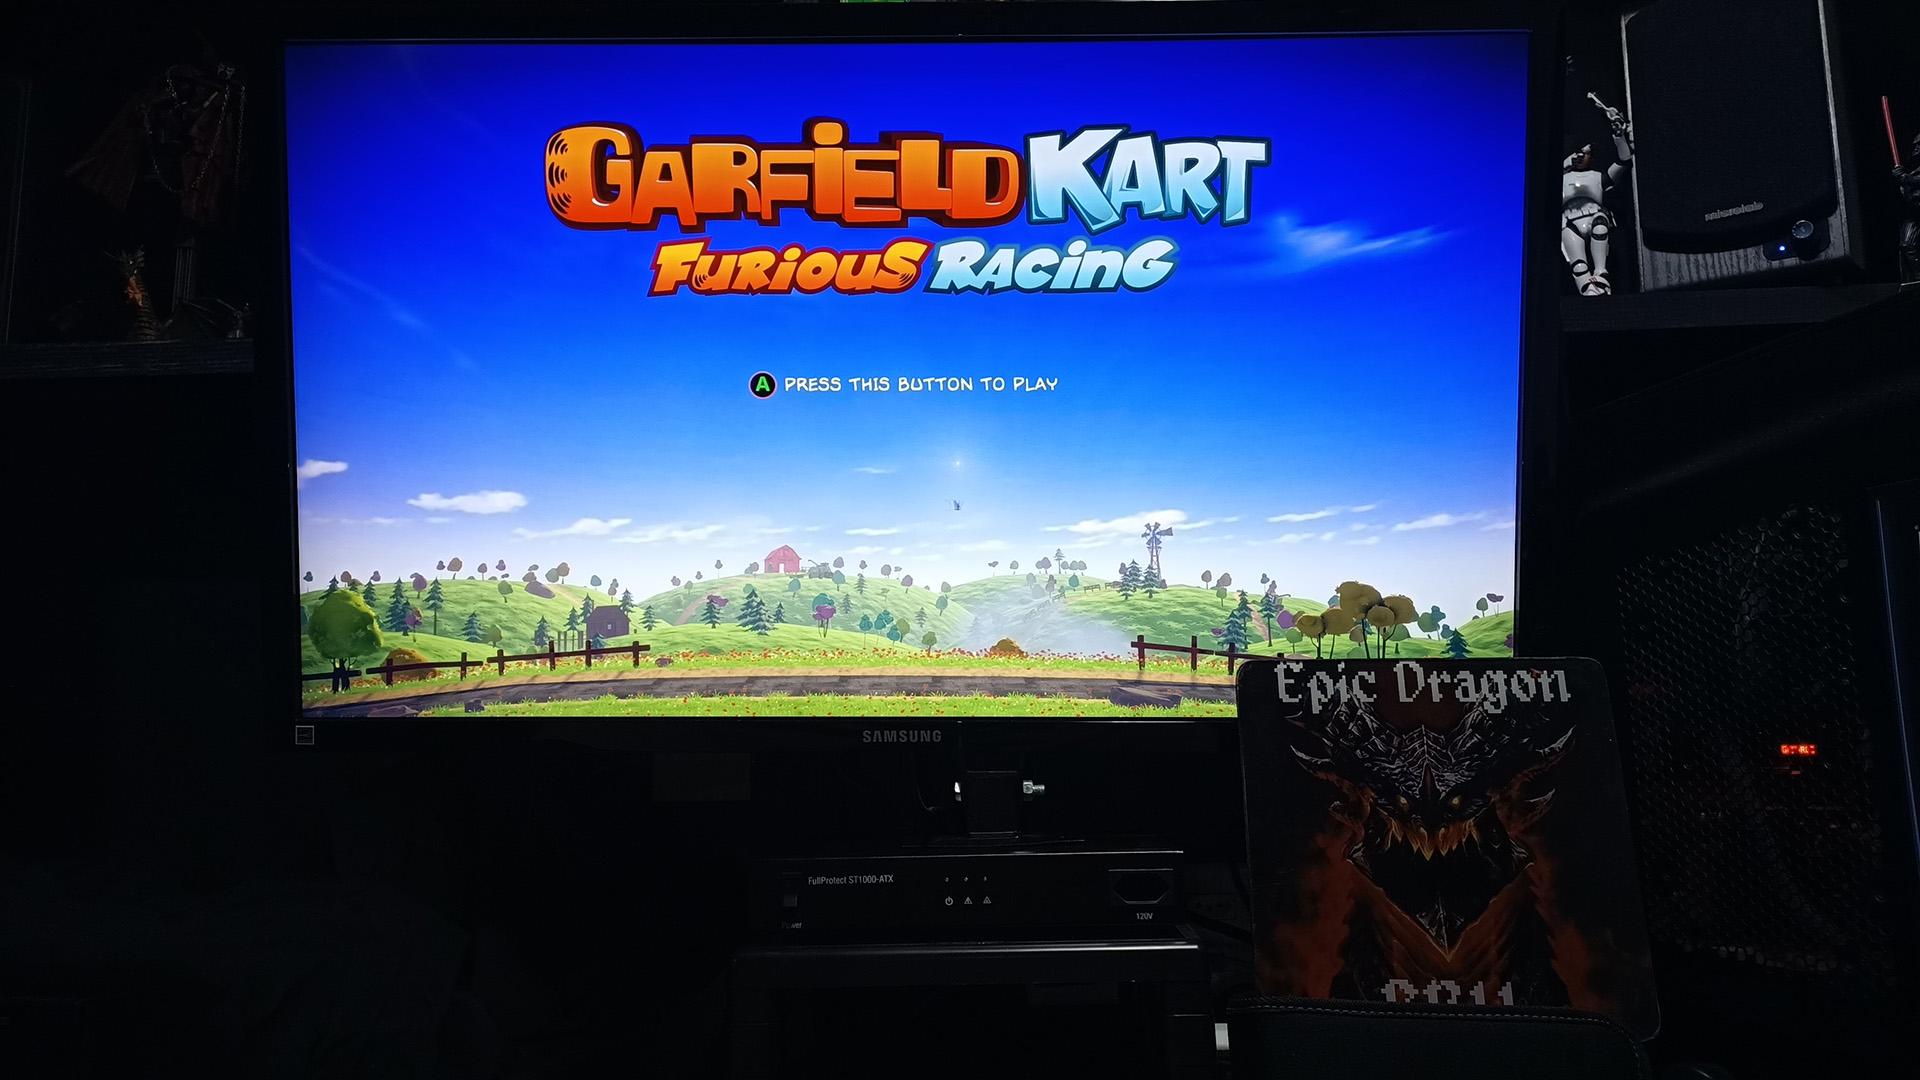 Garfield Kart Furious Racing: Country Bumpkin [Time Trial: 3 Laps] time of 0:02:13.305